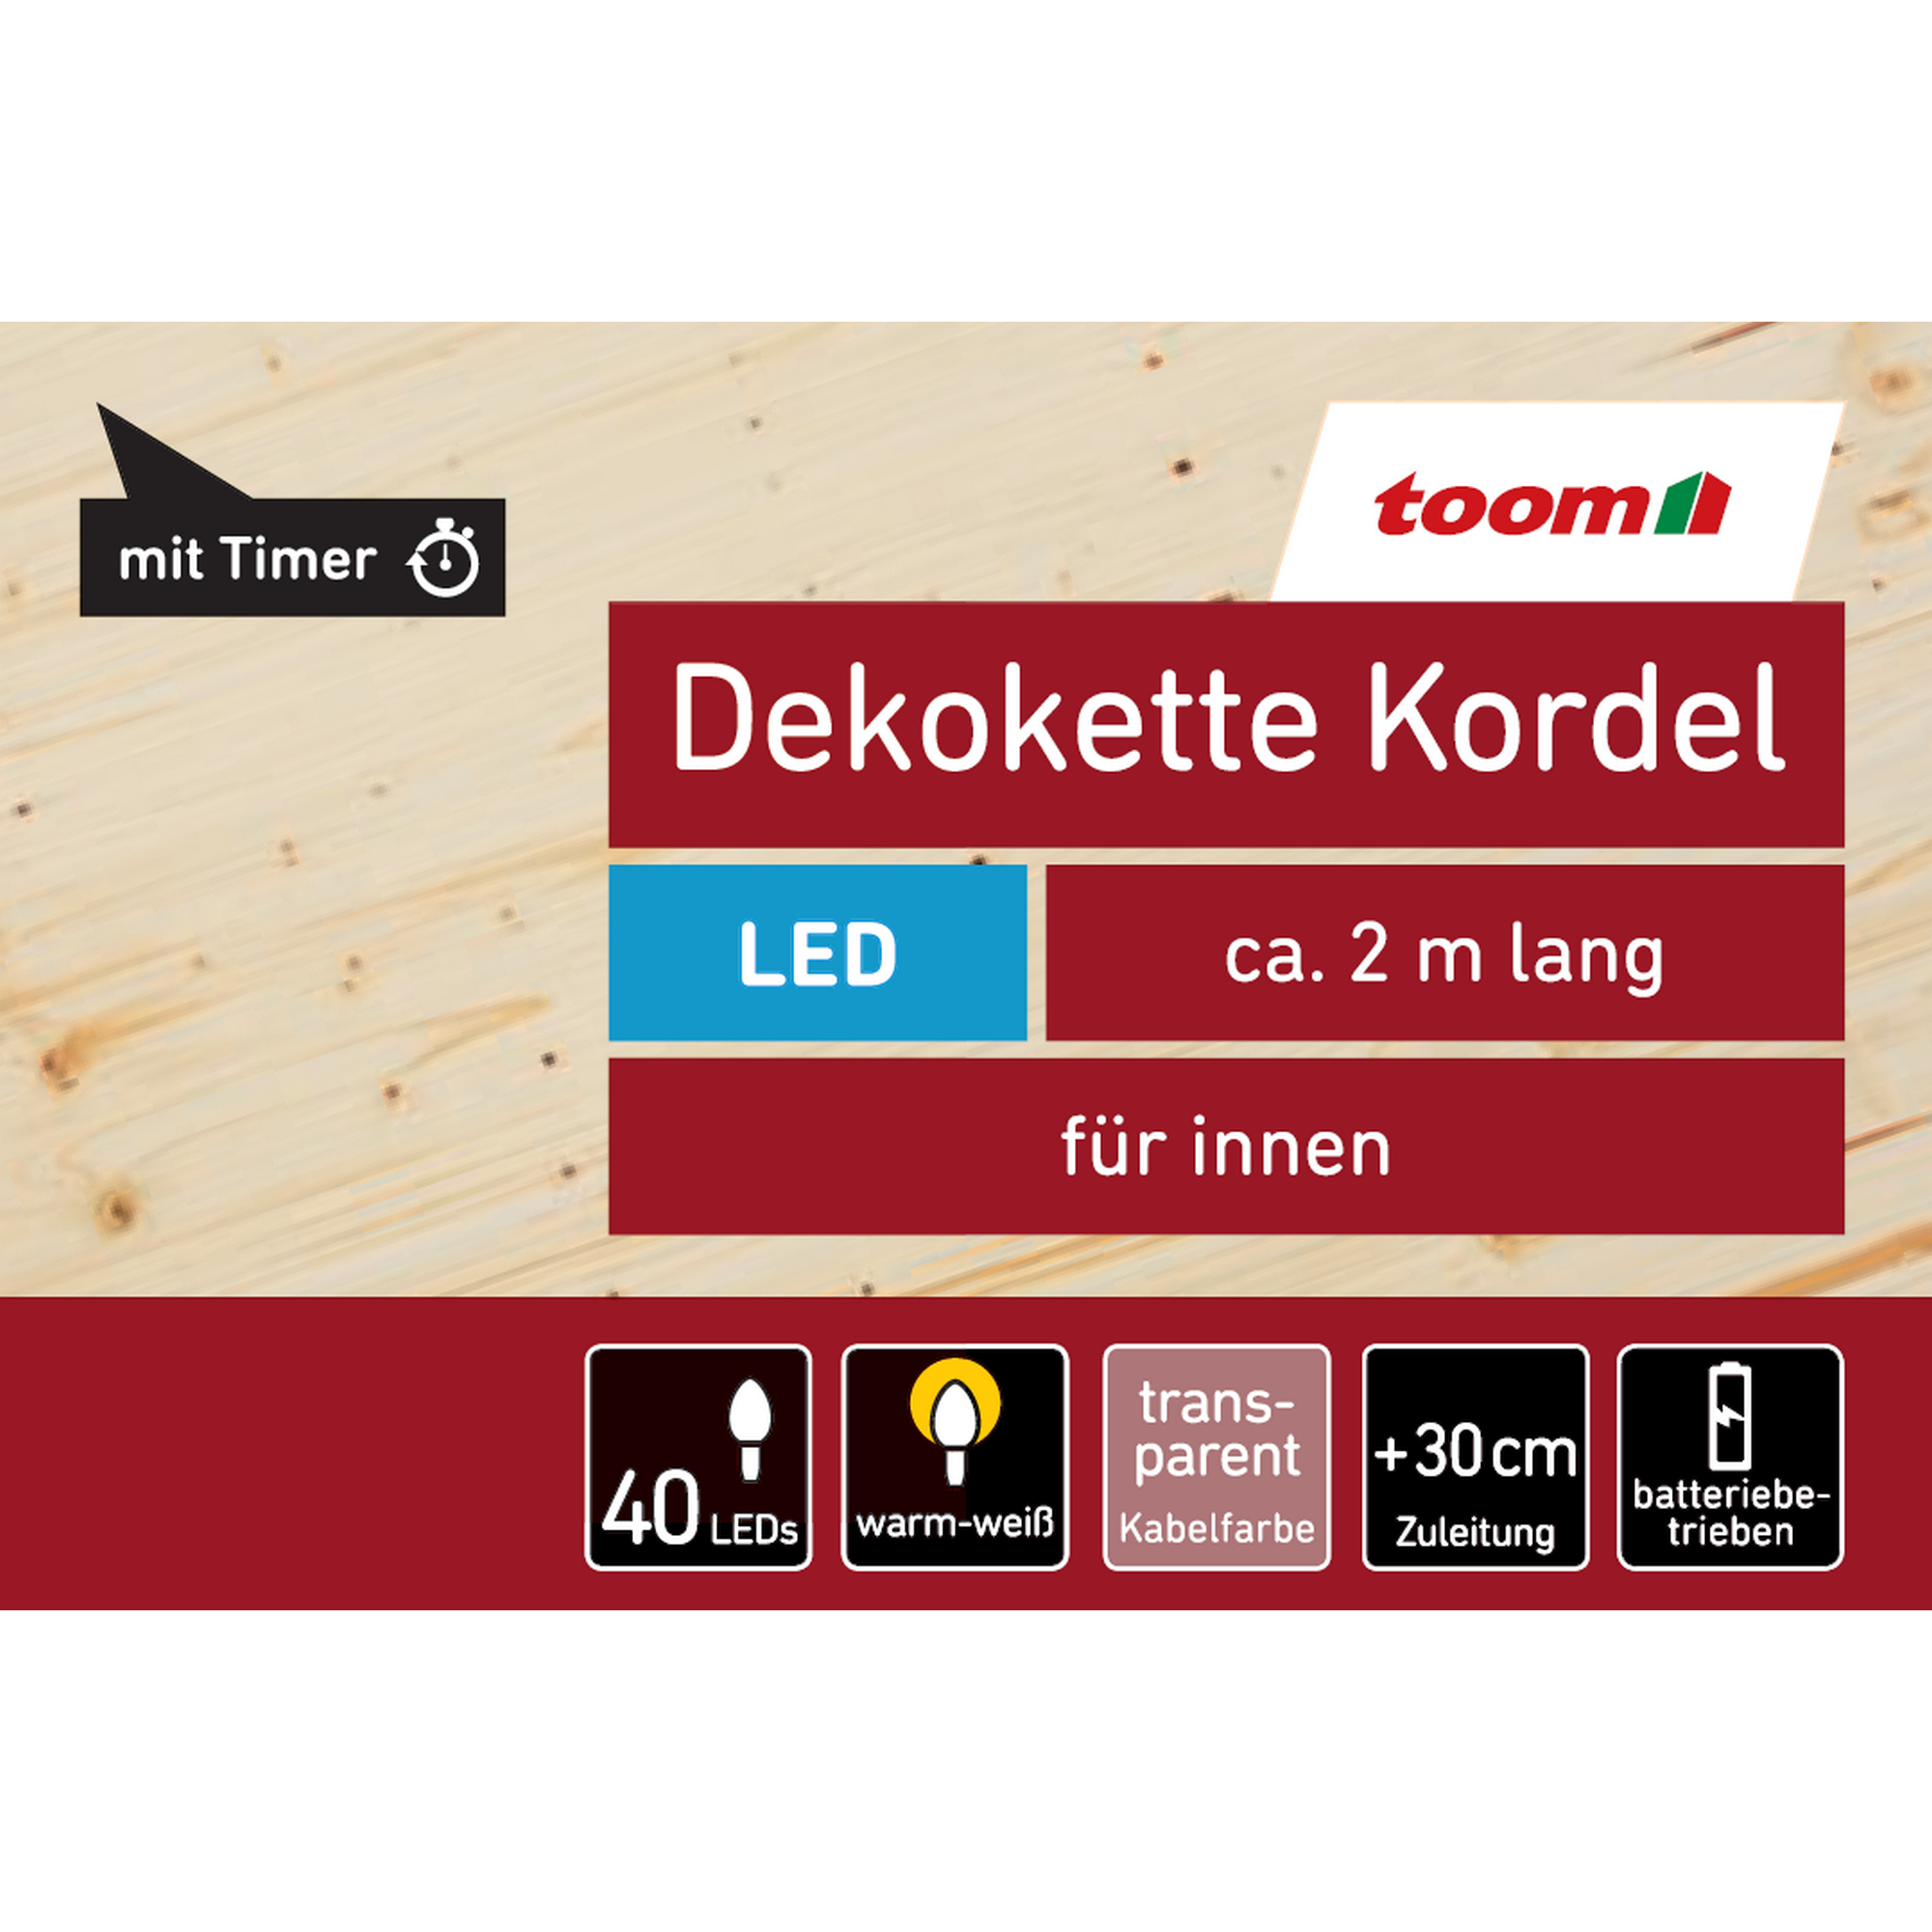 LED-Lichterkette 'Kordel' 40 LEDs warmweiß 200 cm + product picture